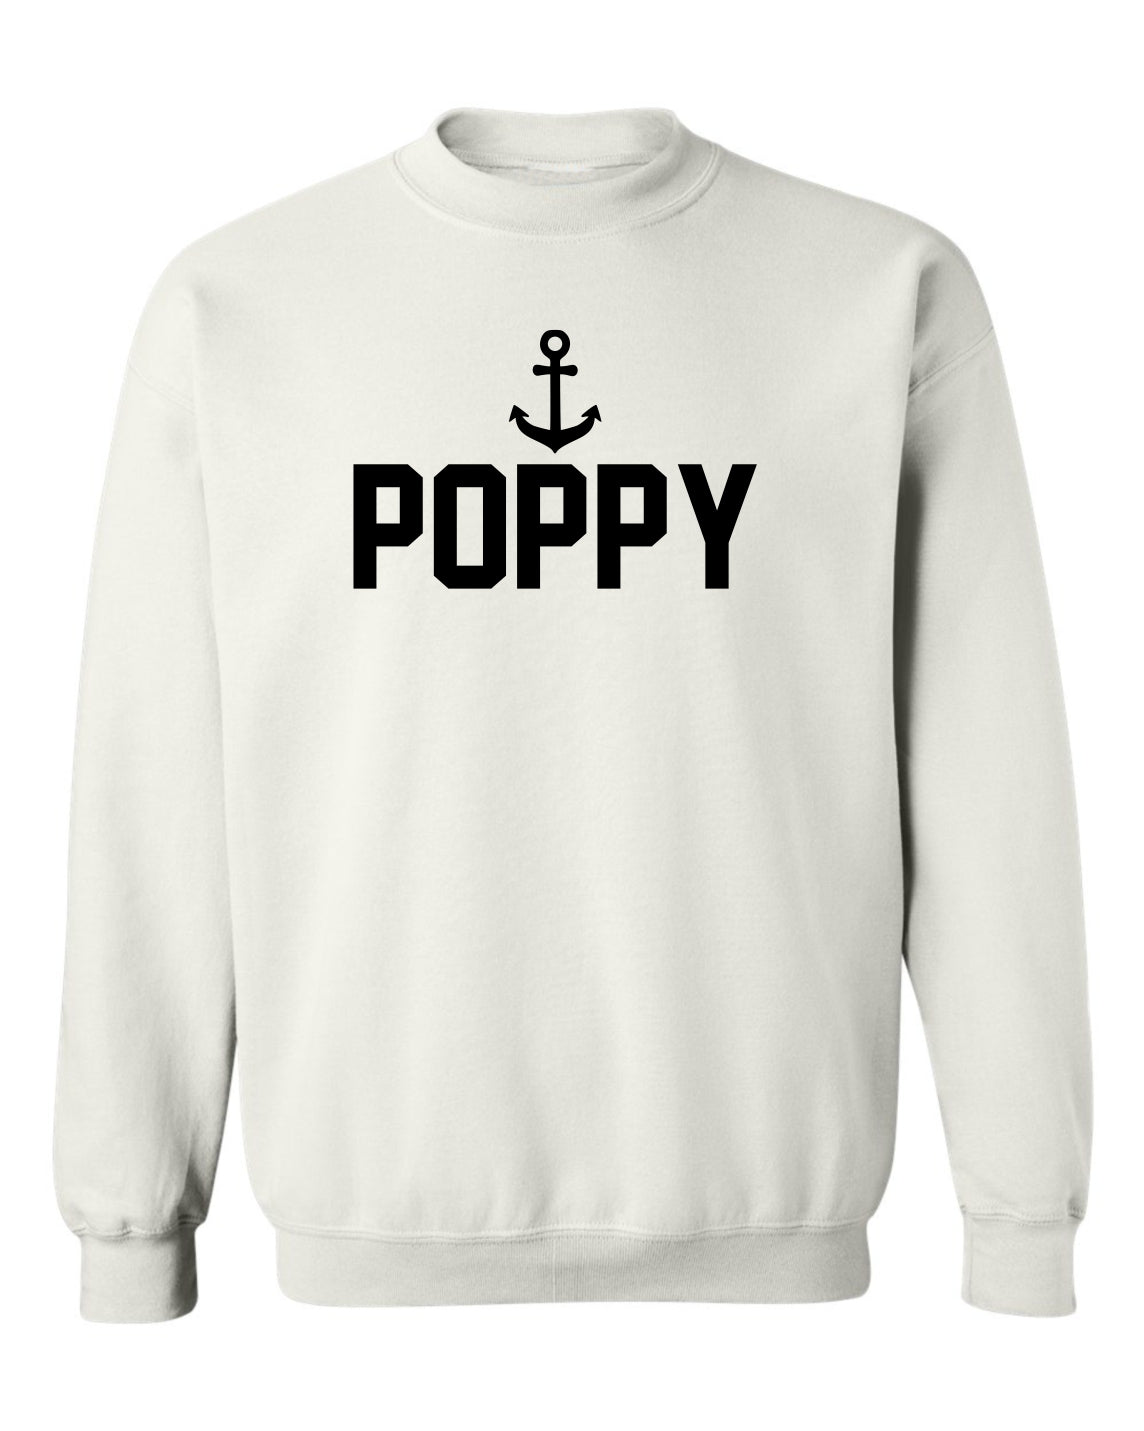 "Poppy" Unisex Crewneck Sweatshirt